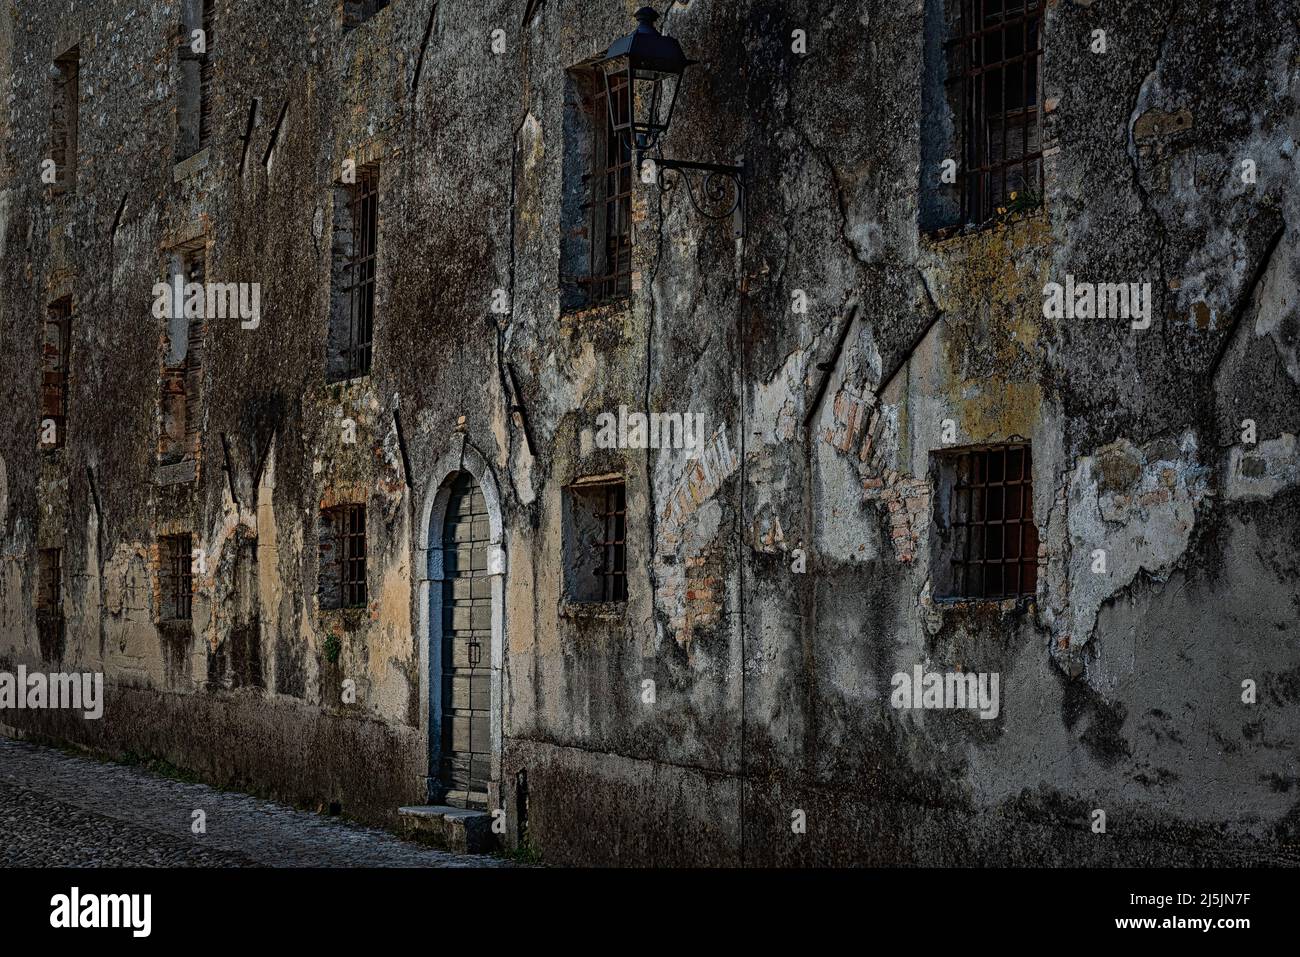 Mystery house facade with rusty iron gratings at the windows. Strassoldo, Udine, Friuli Venezia Giulia, Italy. Stock Photo